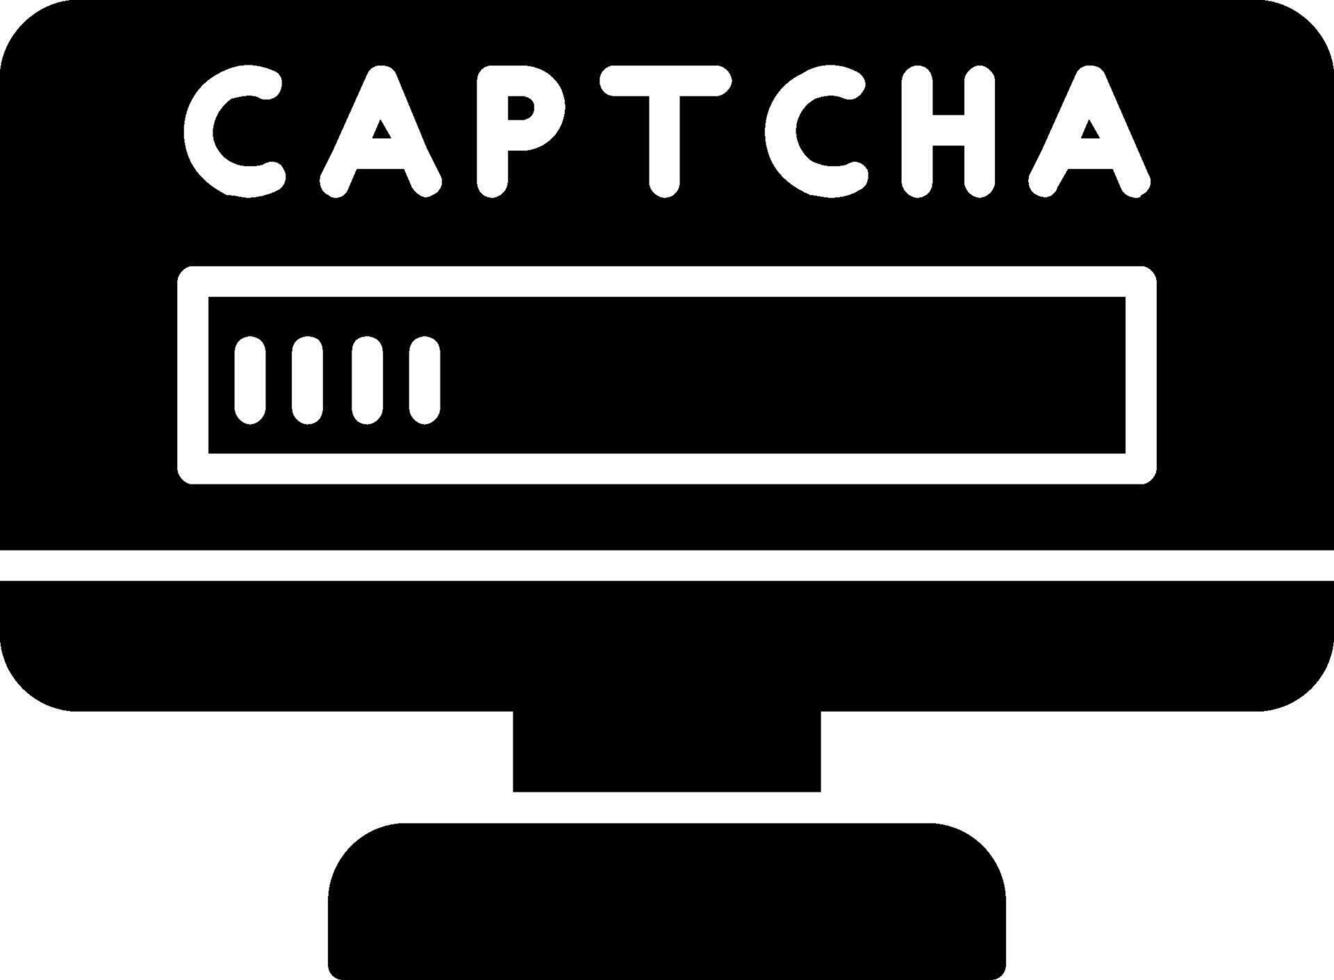 Captcha Glyph Icon Design vector